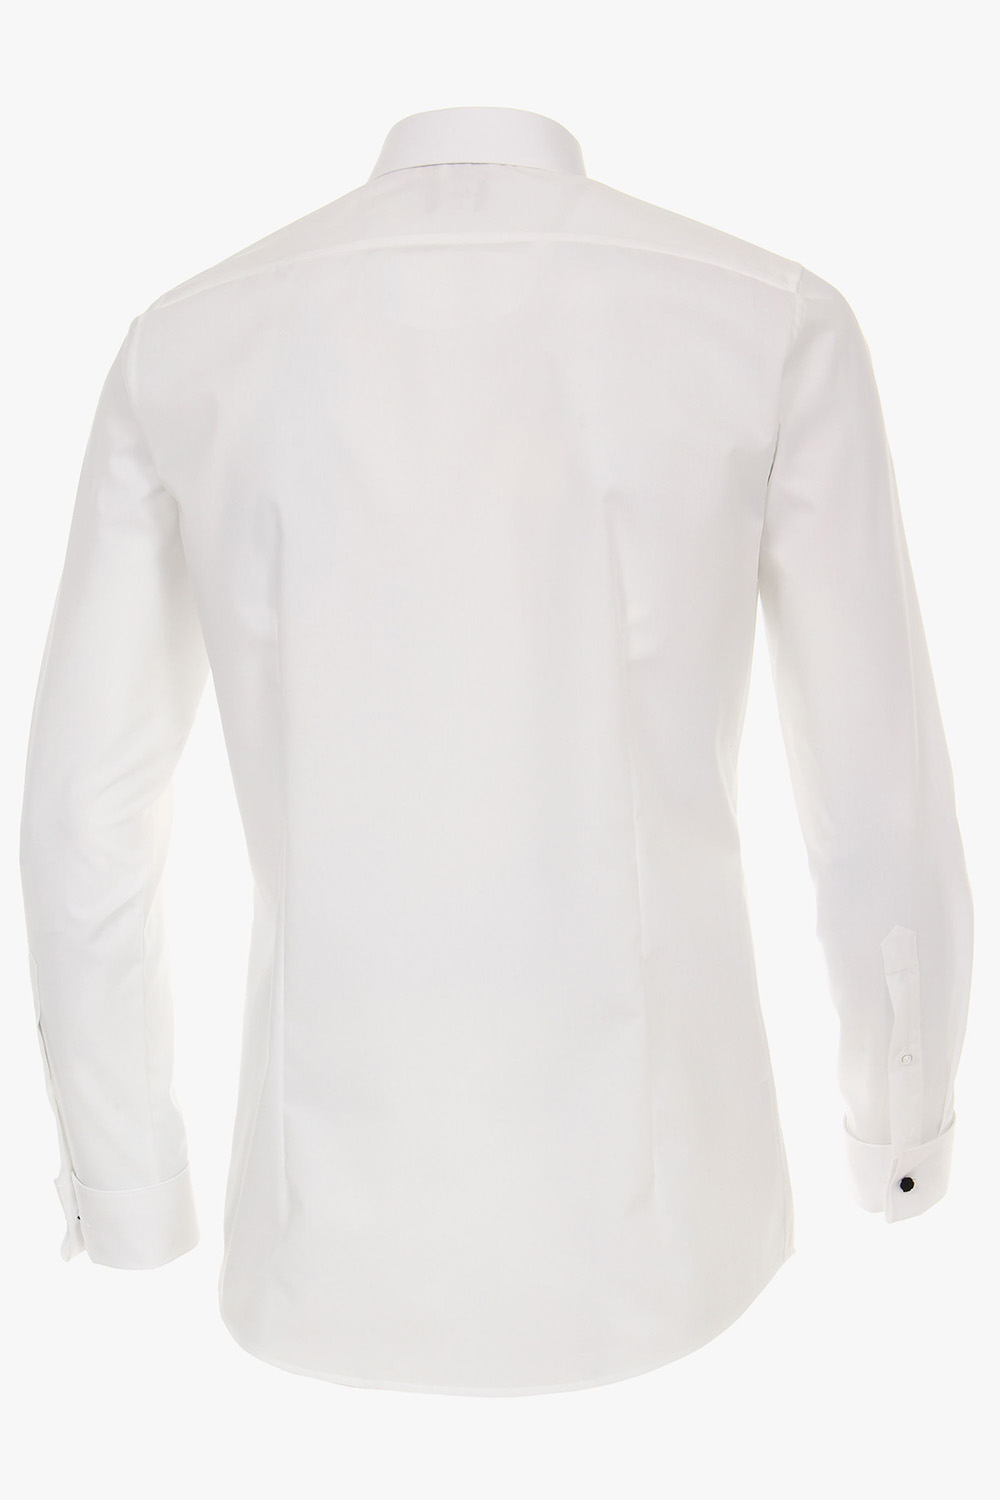 Venti body fit fehér ing hátoldal 001950-000